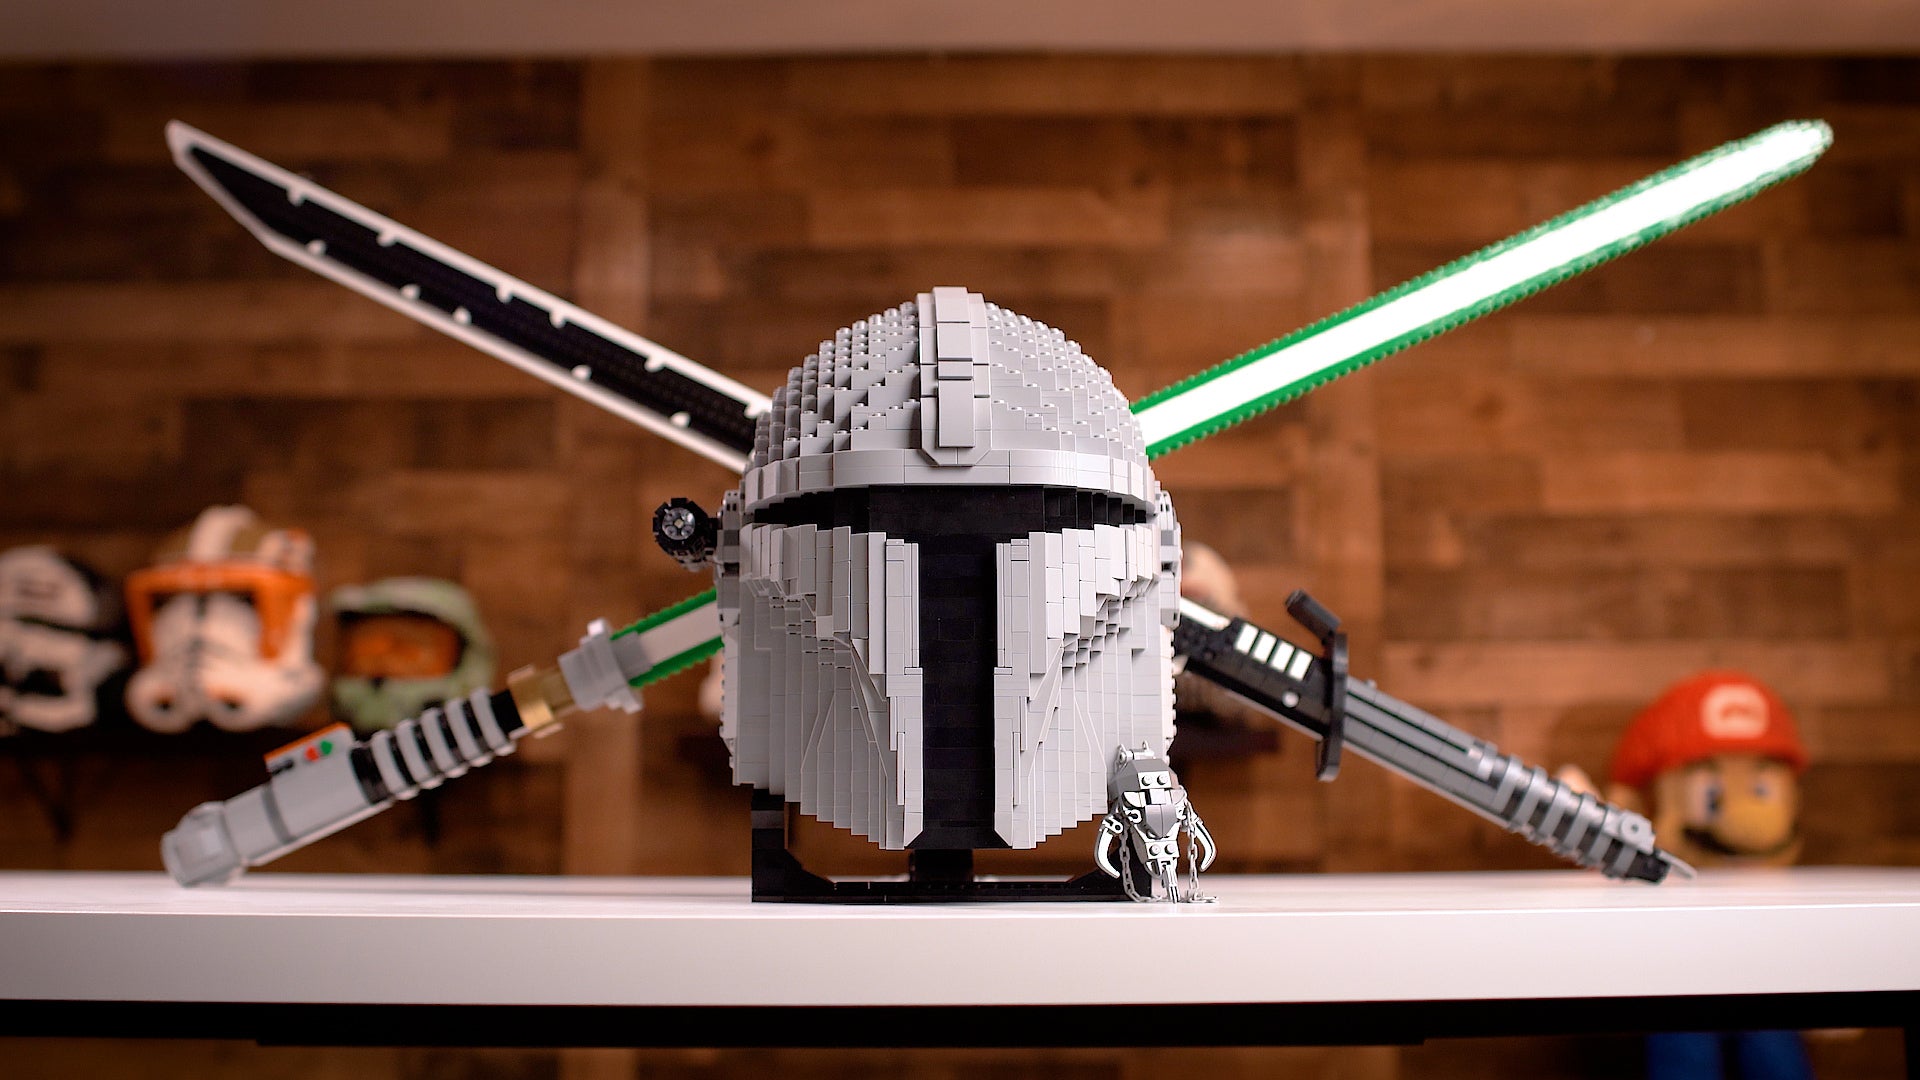 LEGO Star Wars – Mandalorian Armour – Brown, Orange